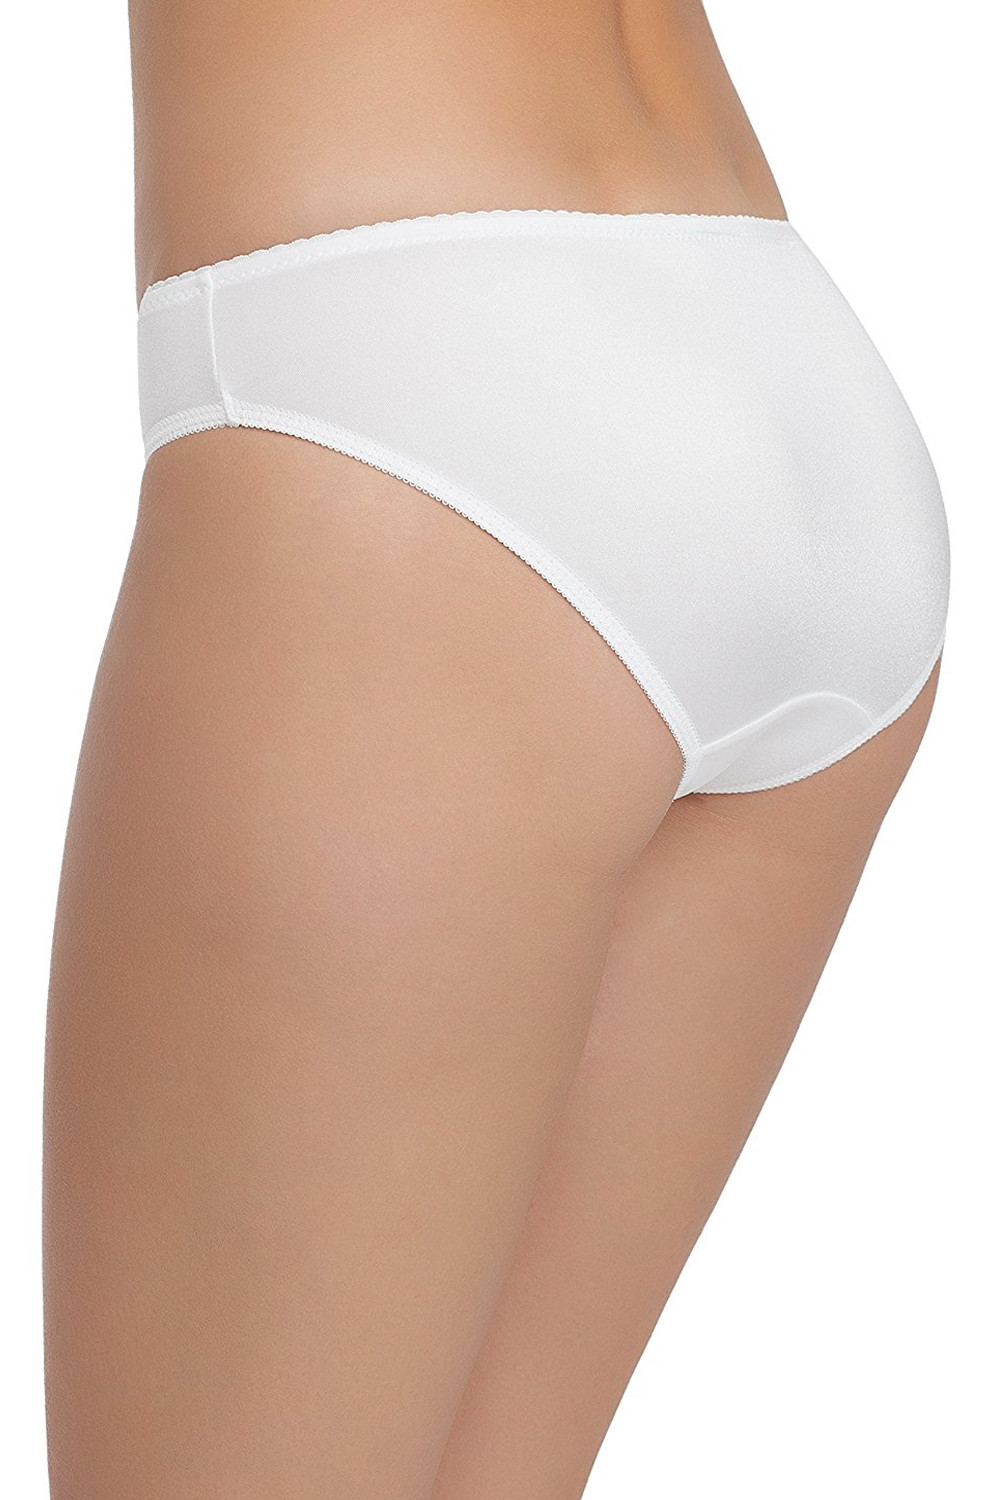 Dámské kalhotky model 5682358 white Bílá S - Vena